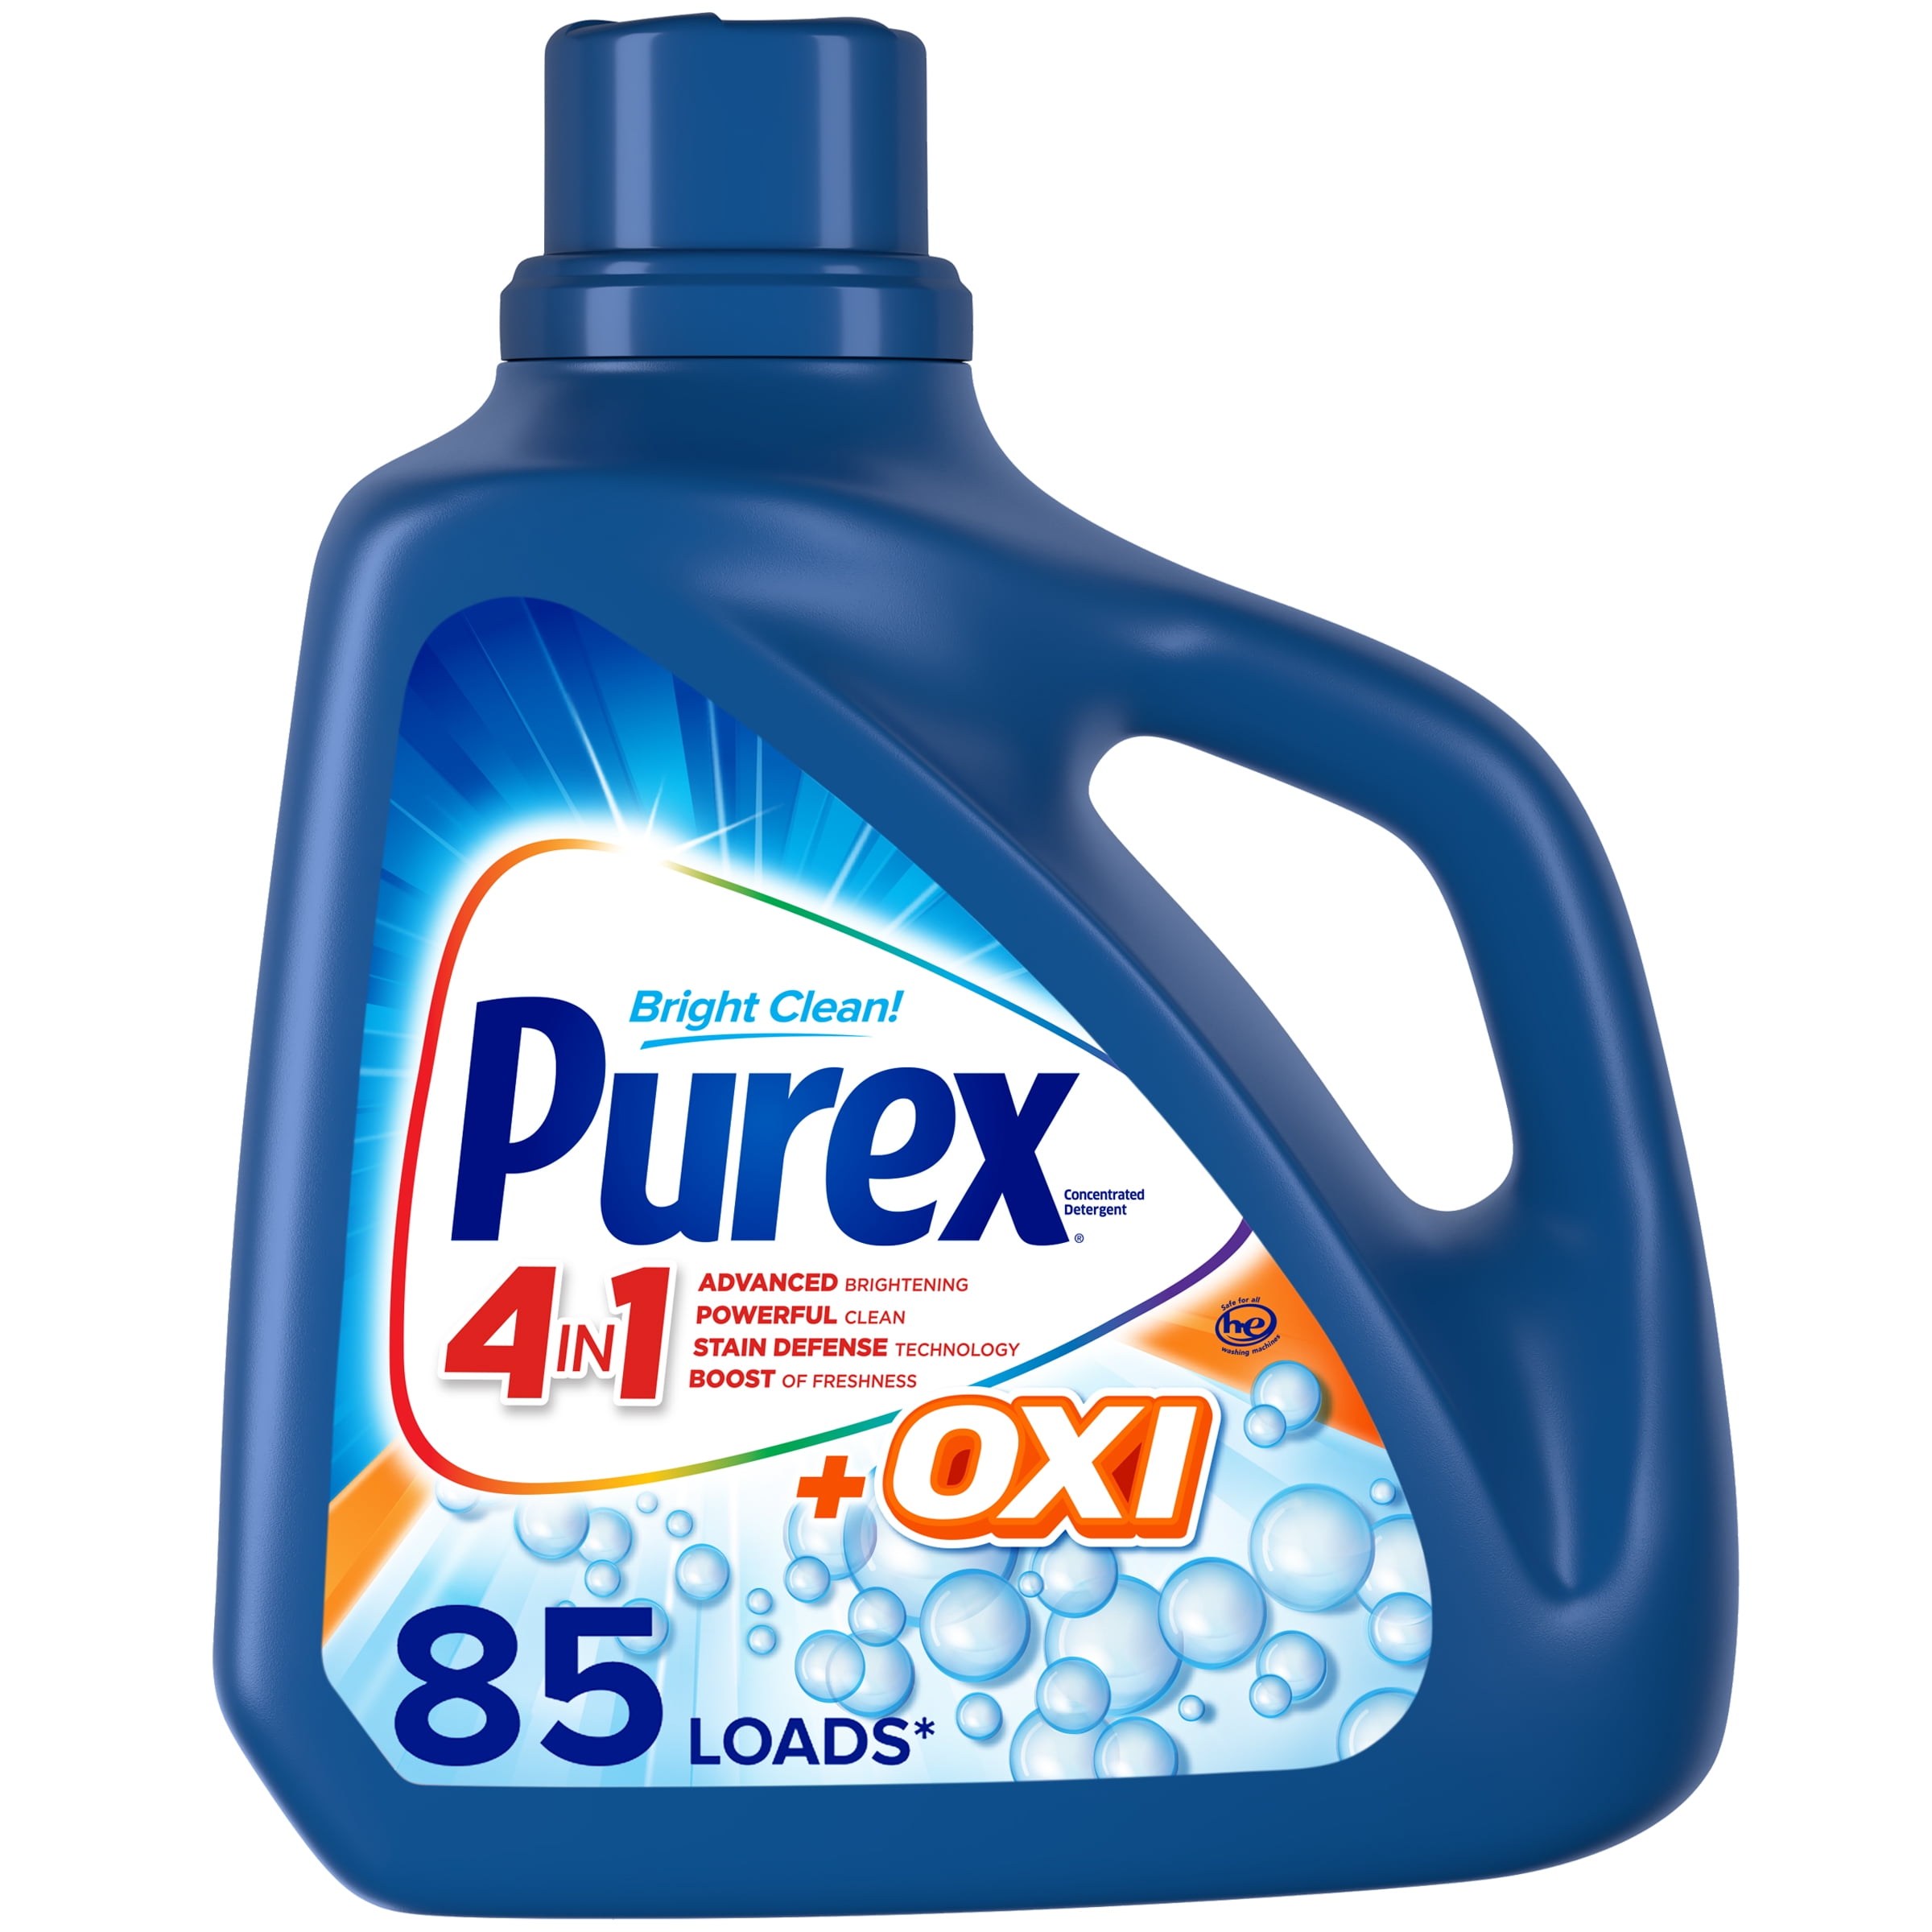 purex-liquid-laundry-detergent-plus-oxi-stain-defense-technology-128